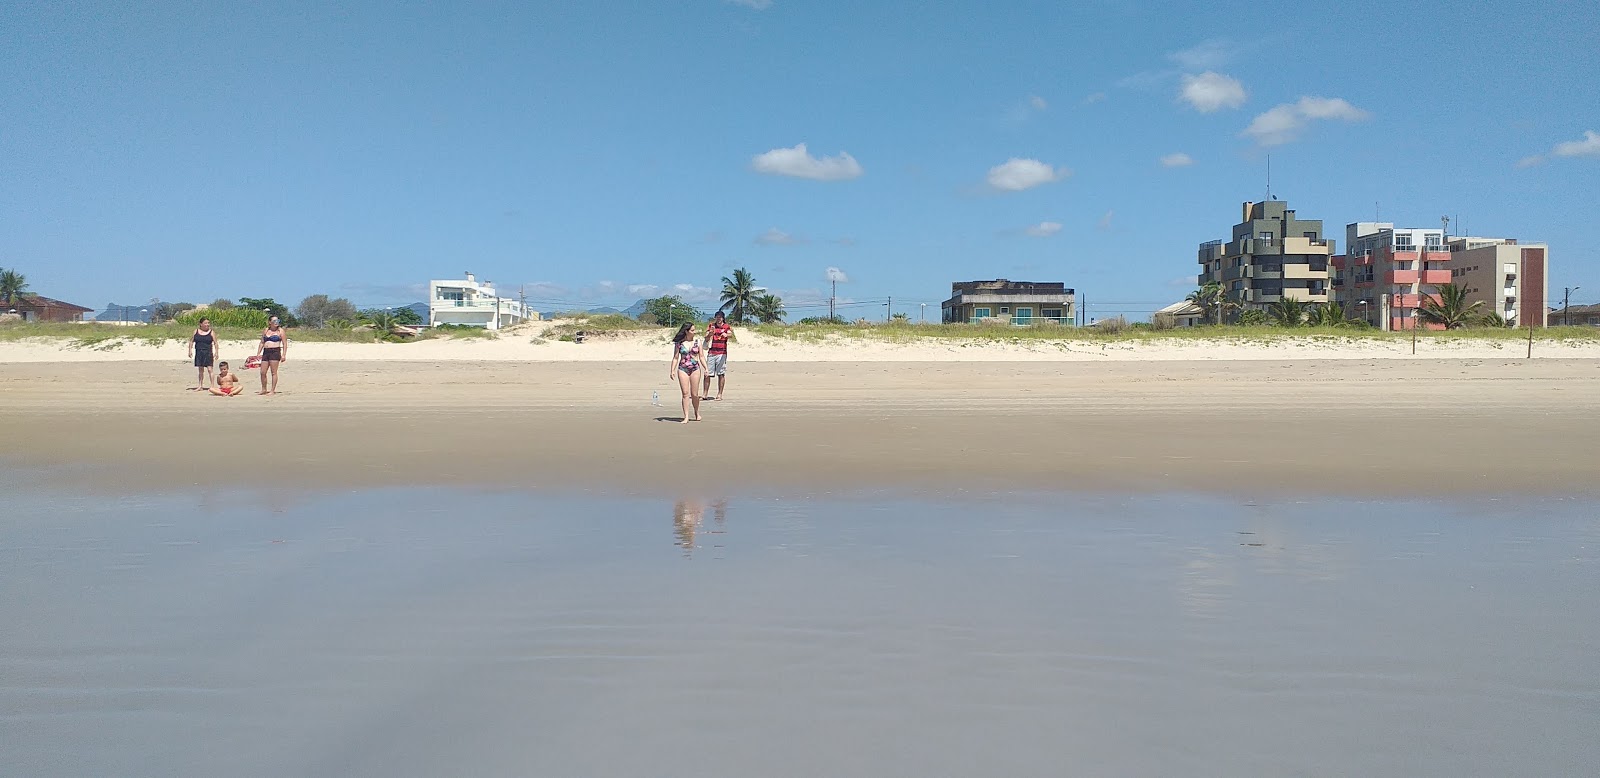 Foto av Stranden Pontal do Sul med ljus fin sand yta